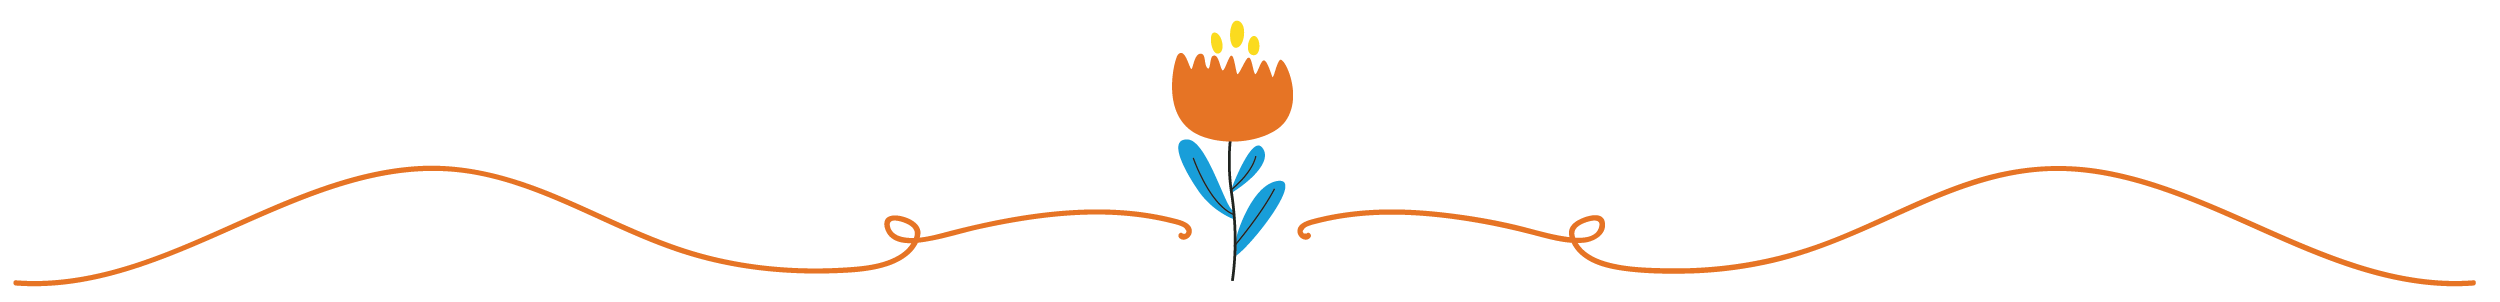 Decorative illustration of a flower